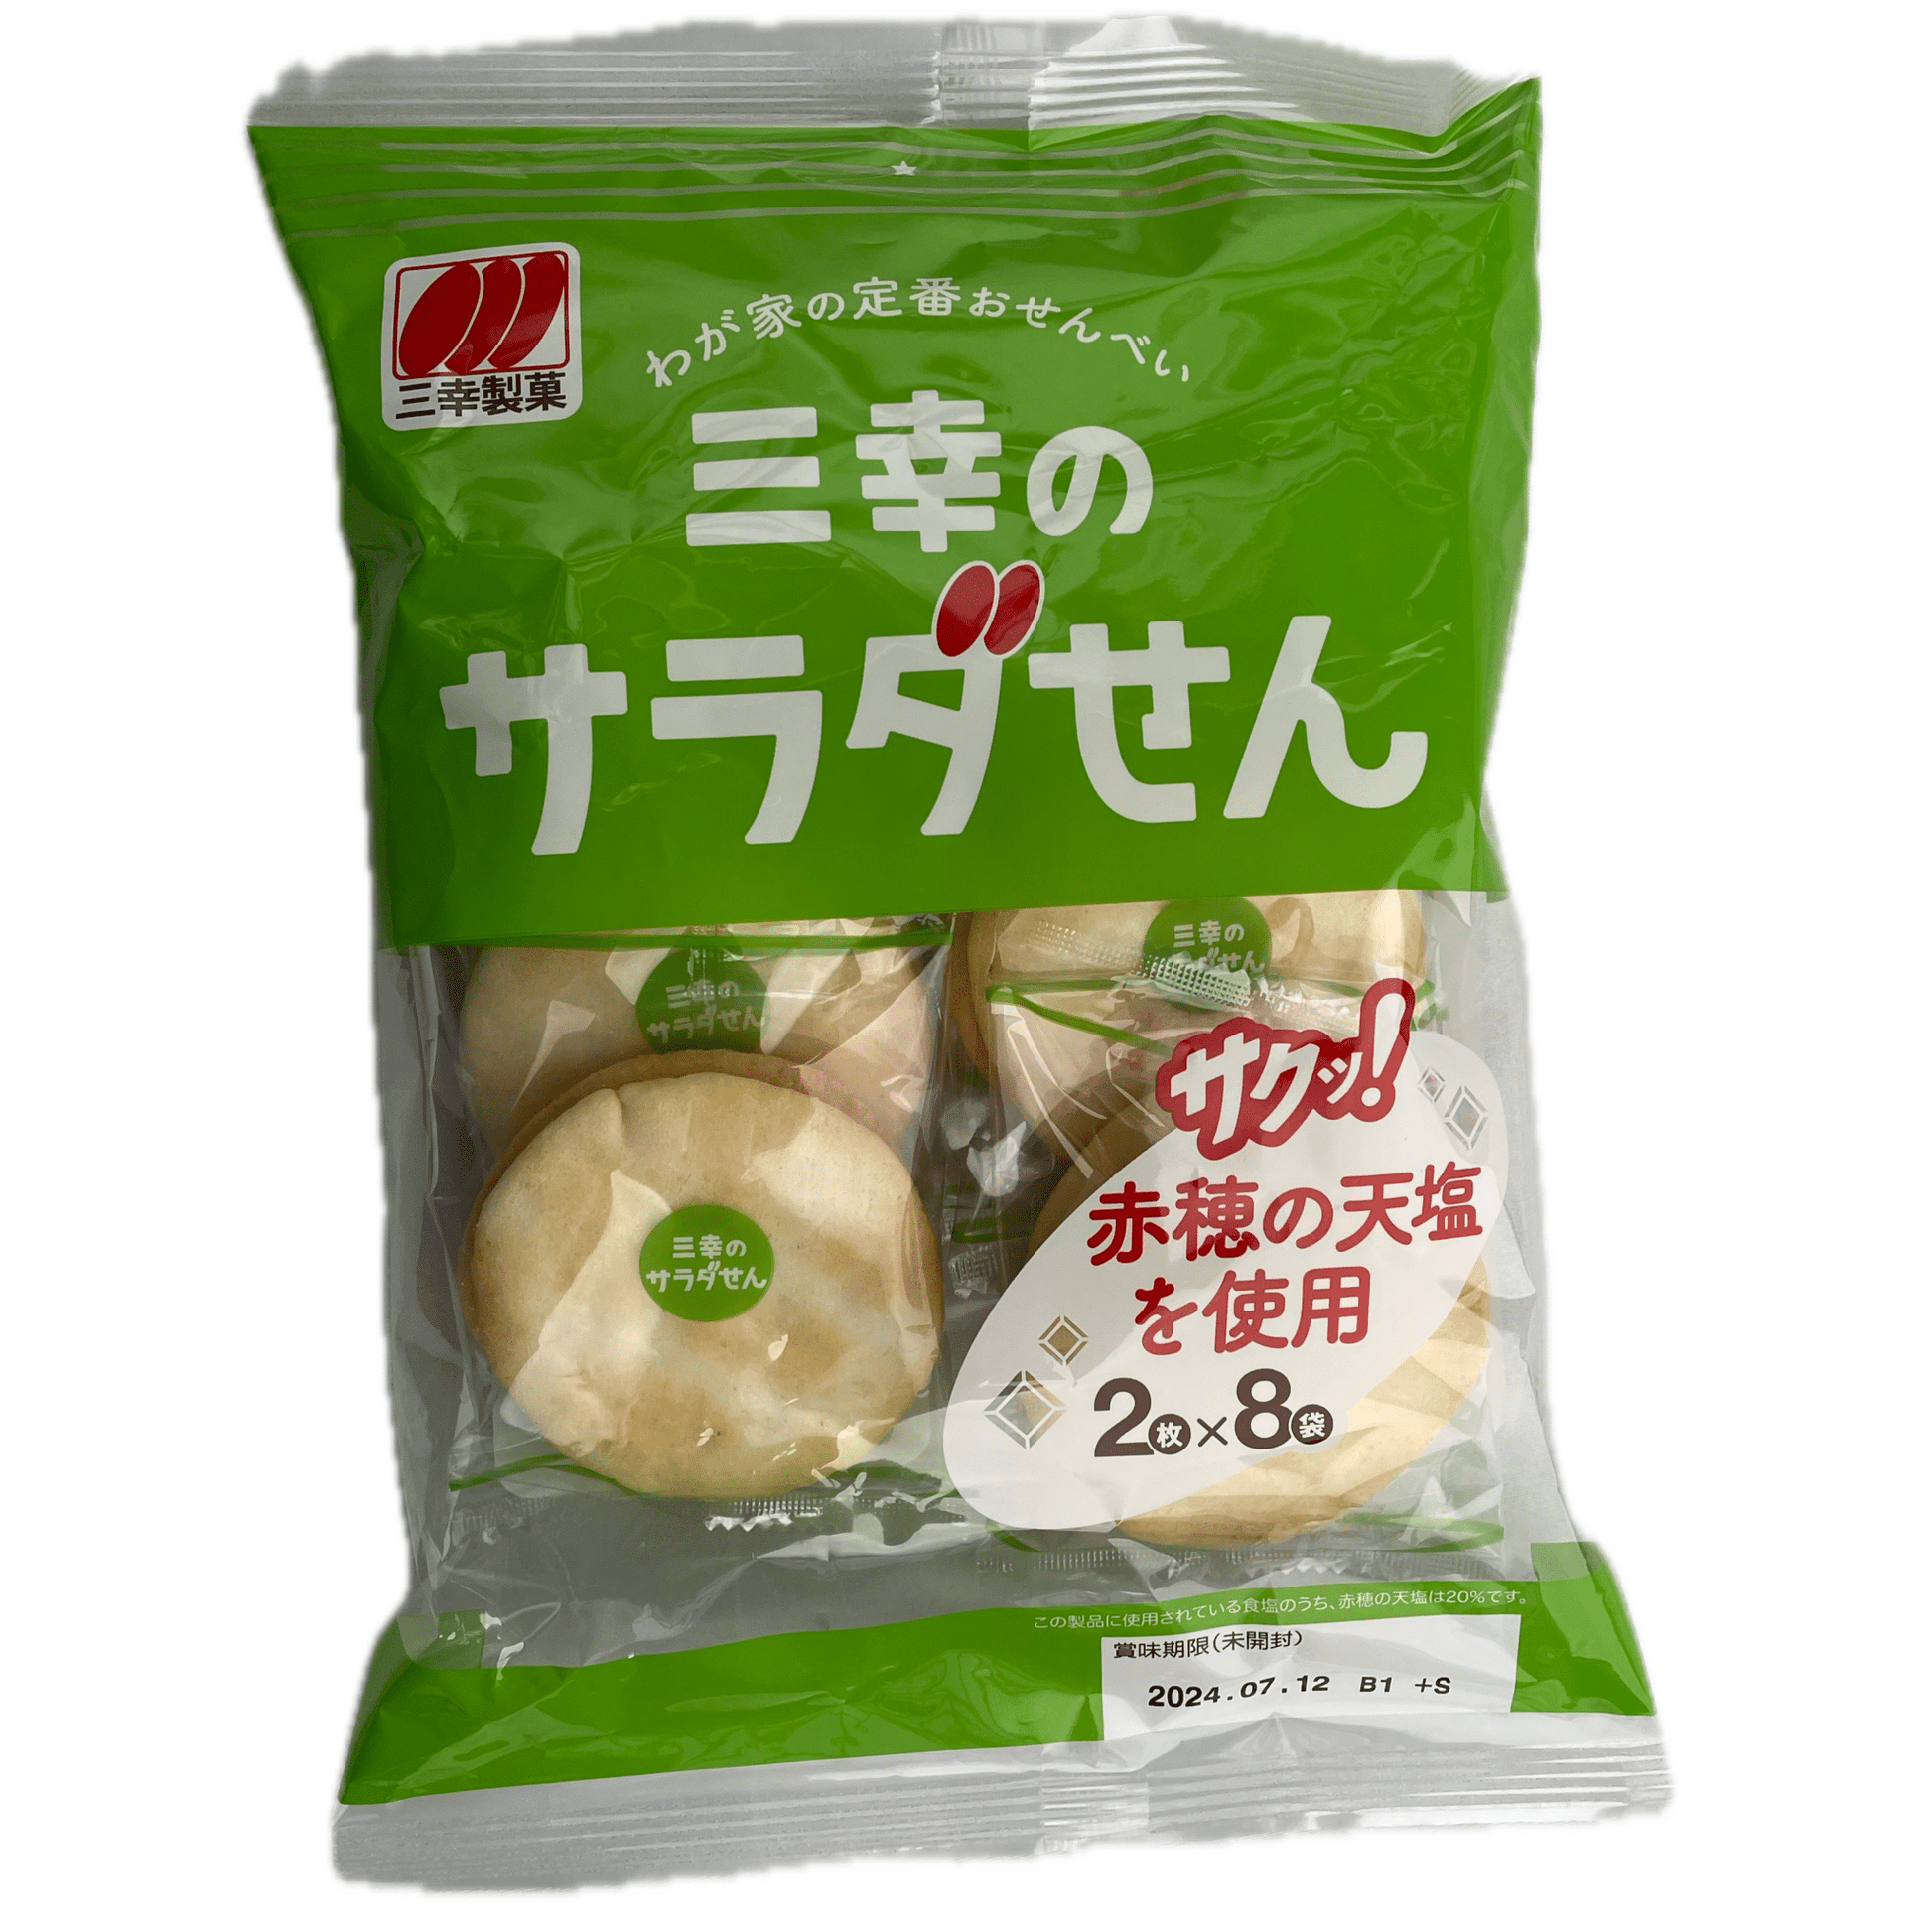 Sanko Rice Cracker Salad 16pcs / 三幸 サラダせんべい 16枚入 - RiceWineShop